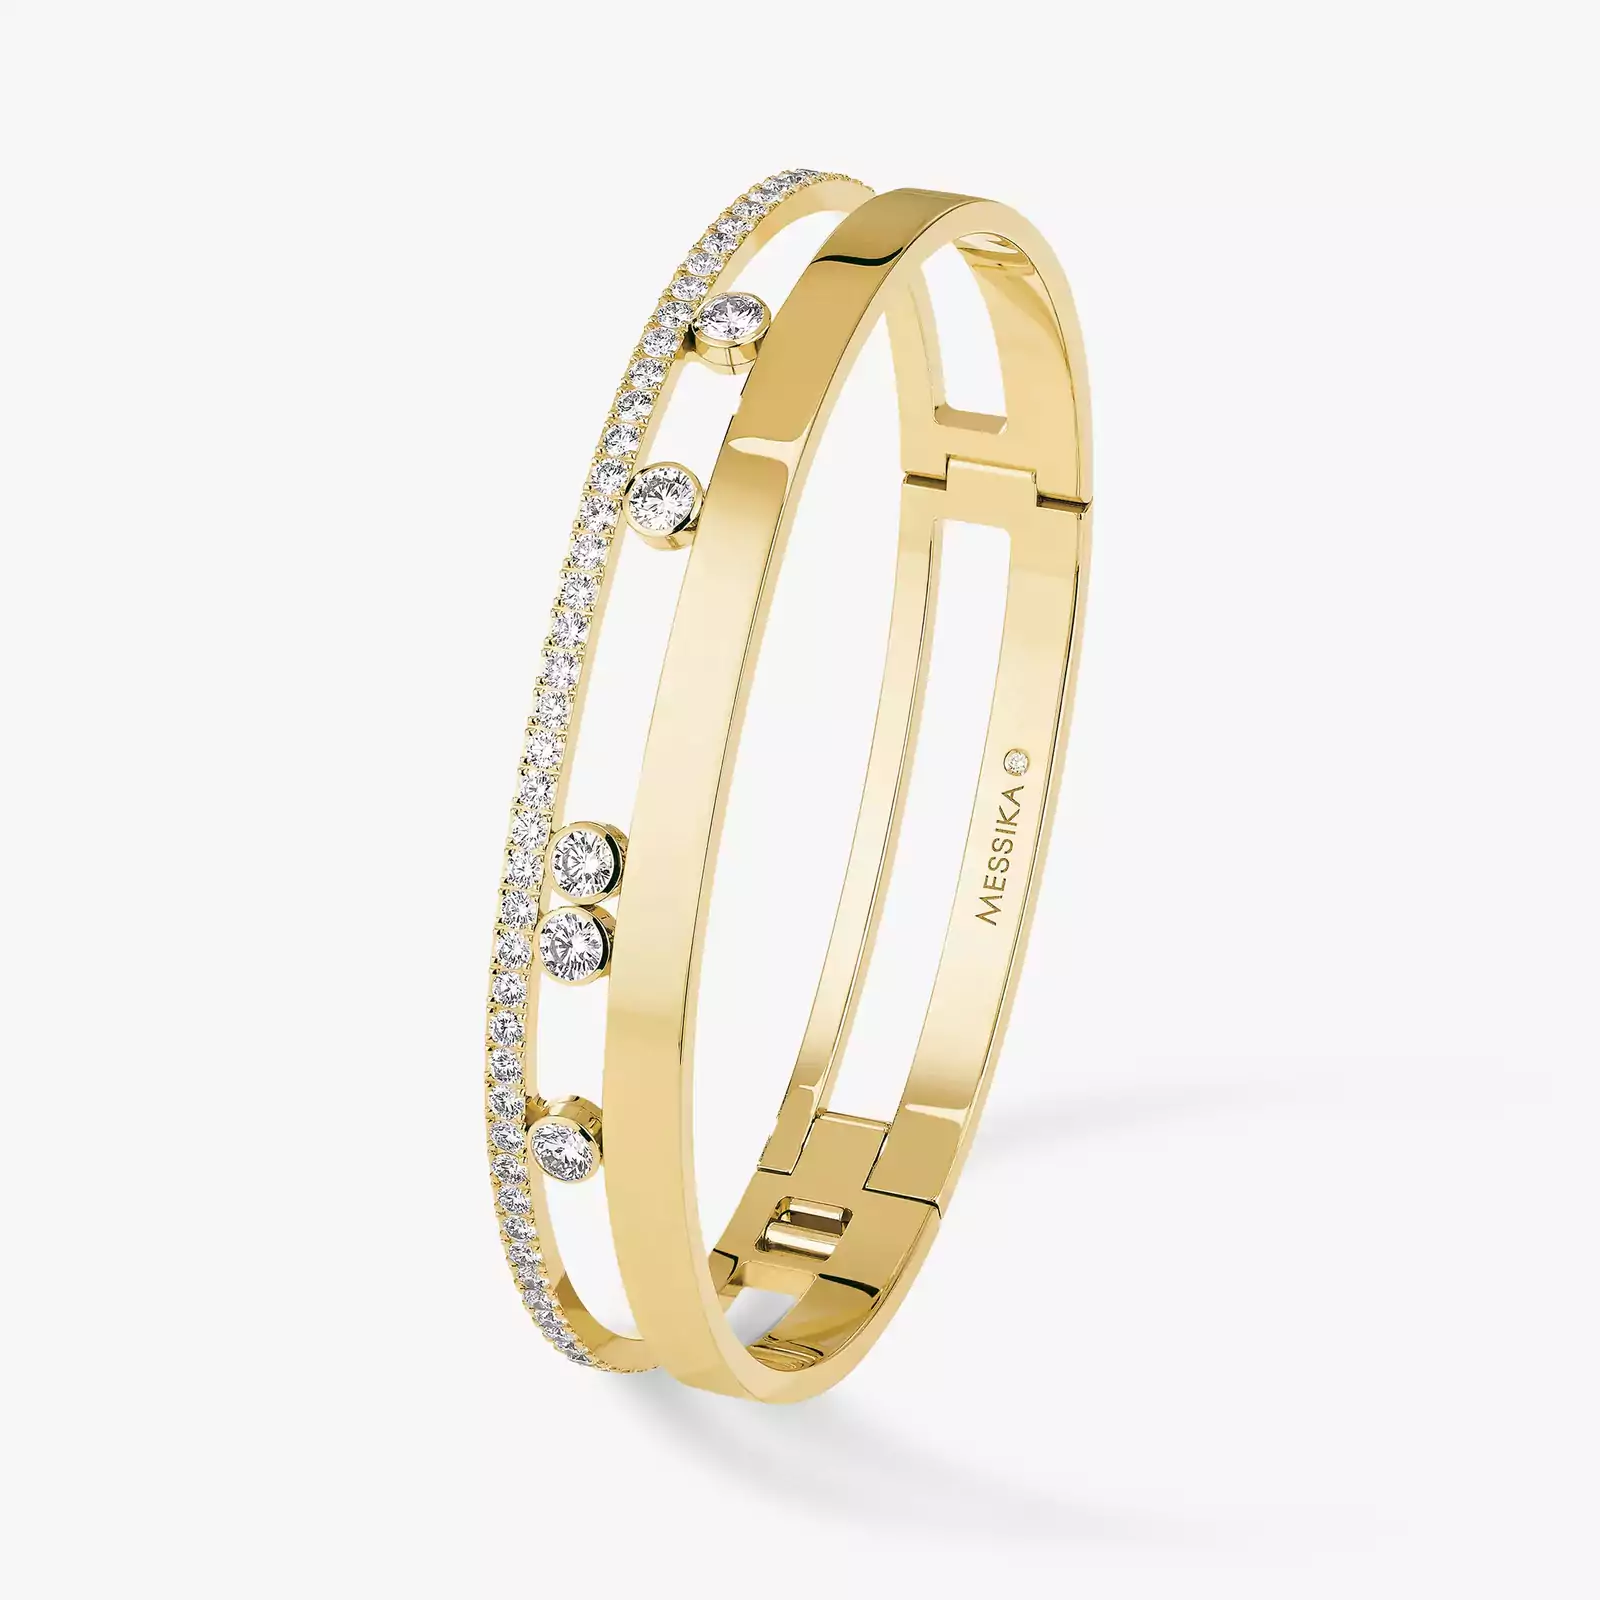 Move Romane Large Bangle Yellow Gold For Her Diamond Bracelet 06747-YG